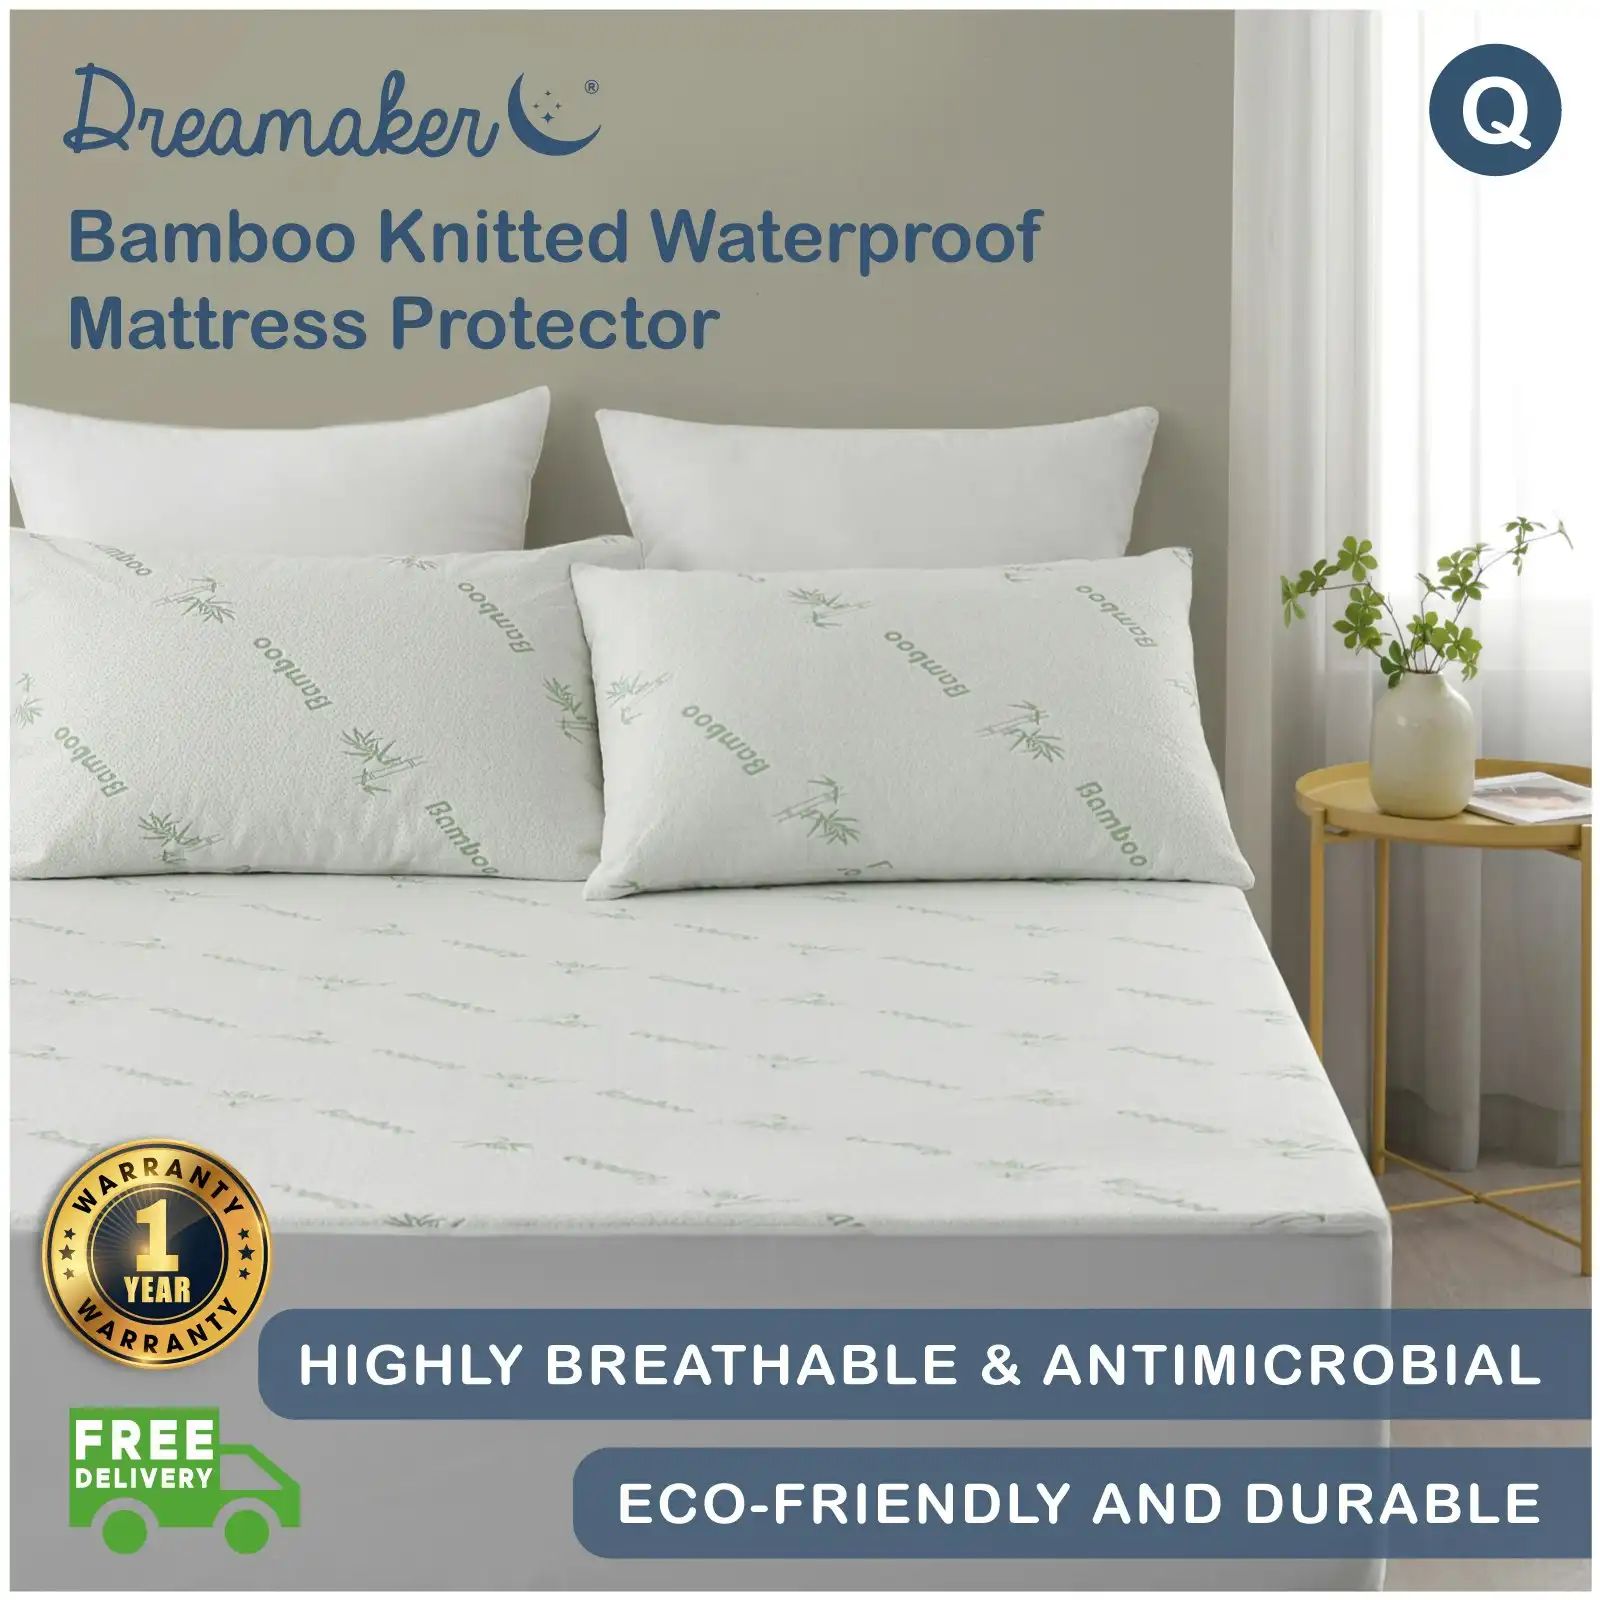 9009444 Dreamaker Bamboo Knitted Waterproof Mattress Protector - Queen Bed